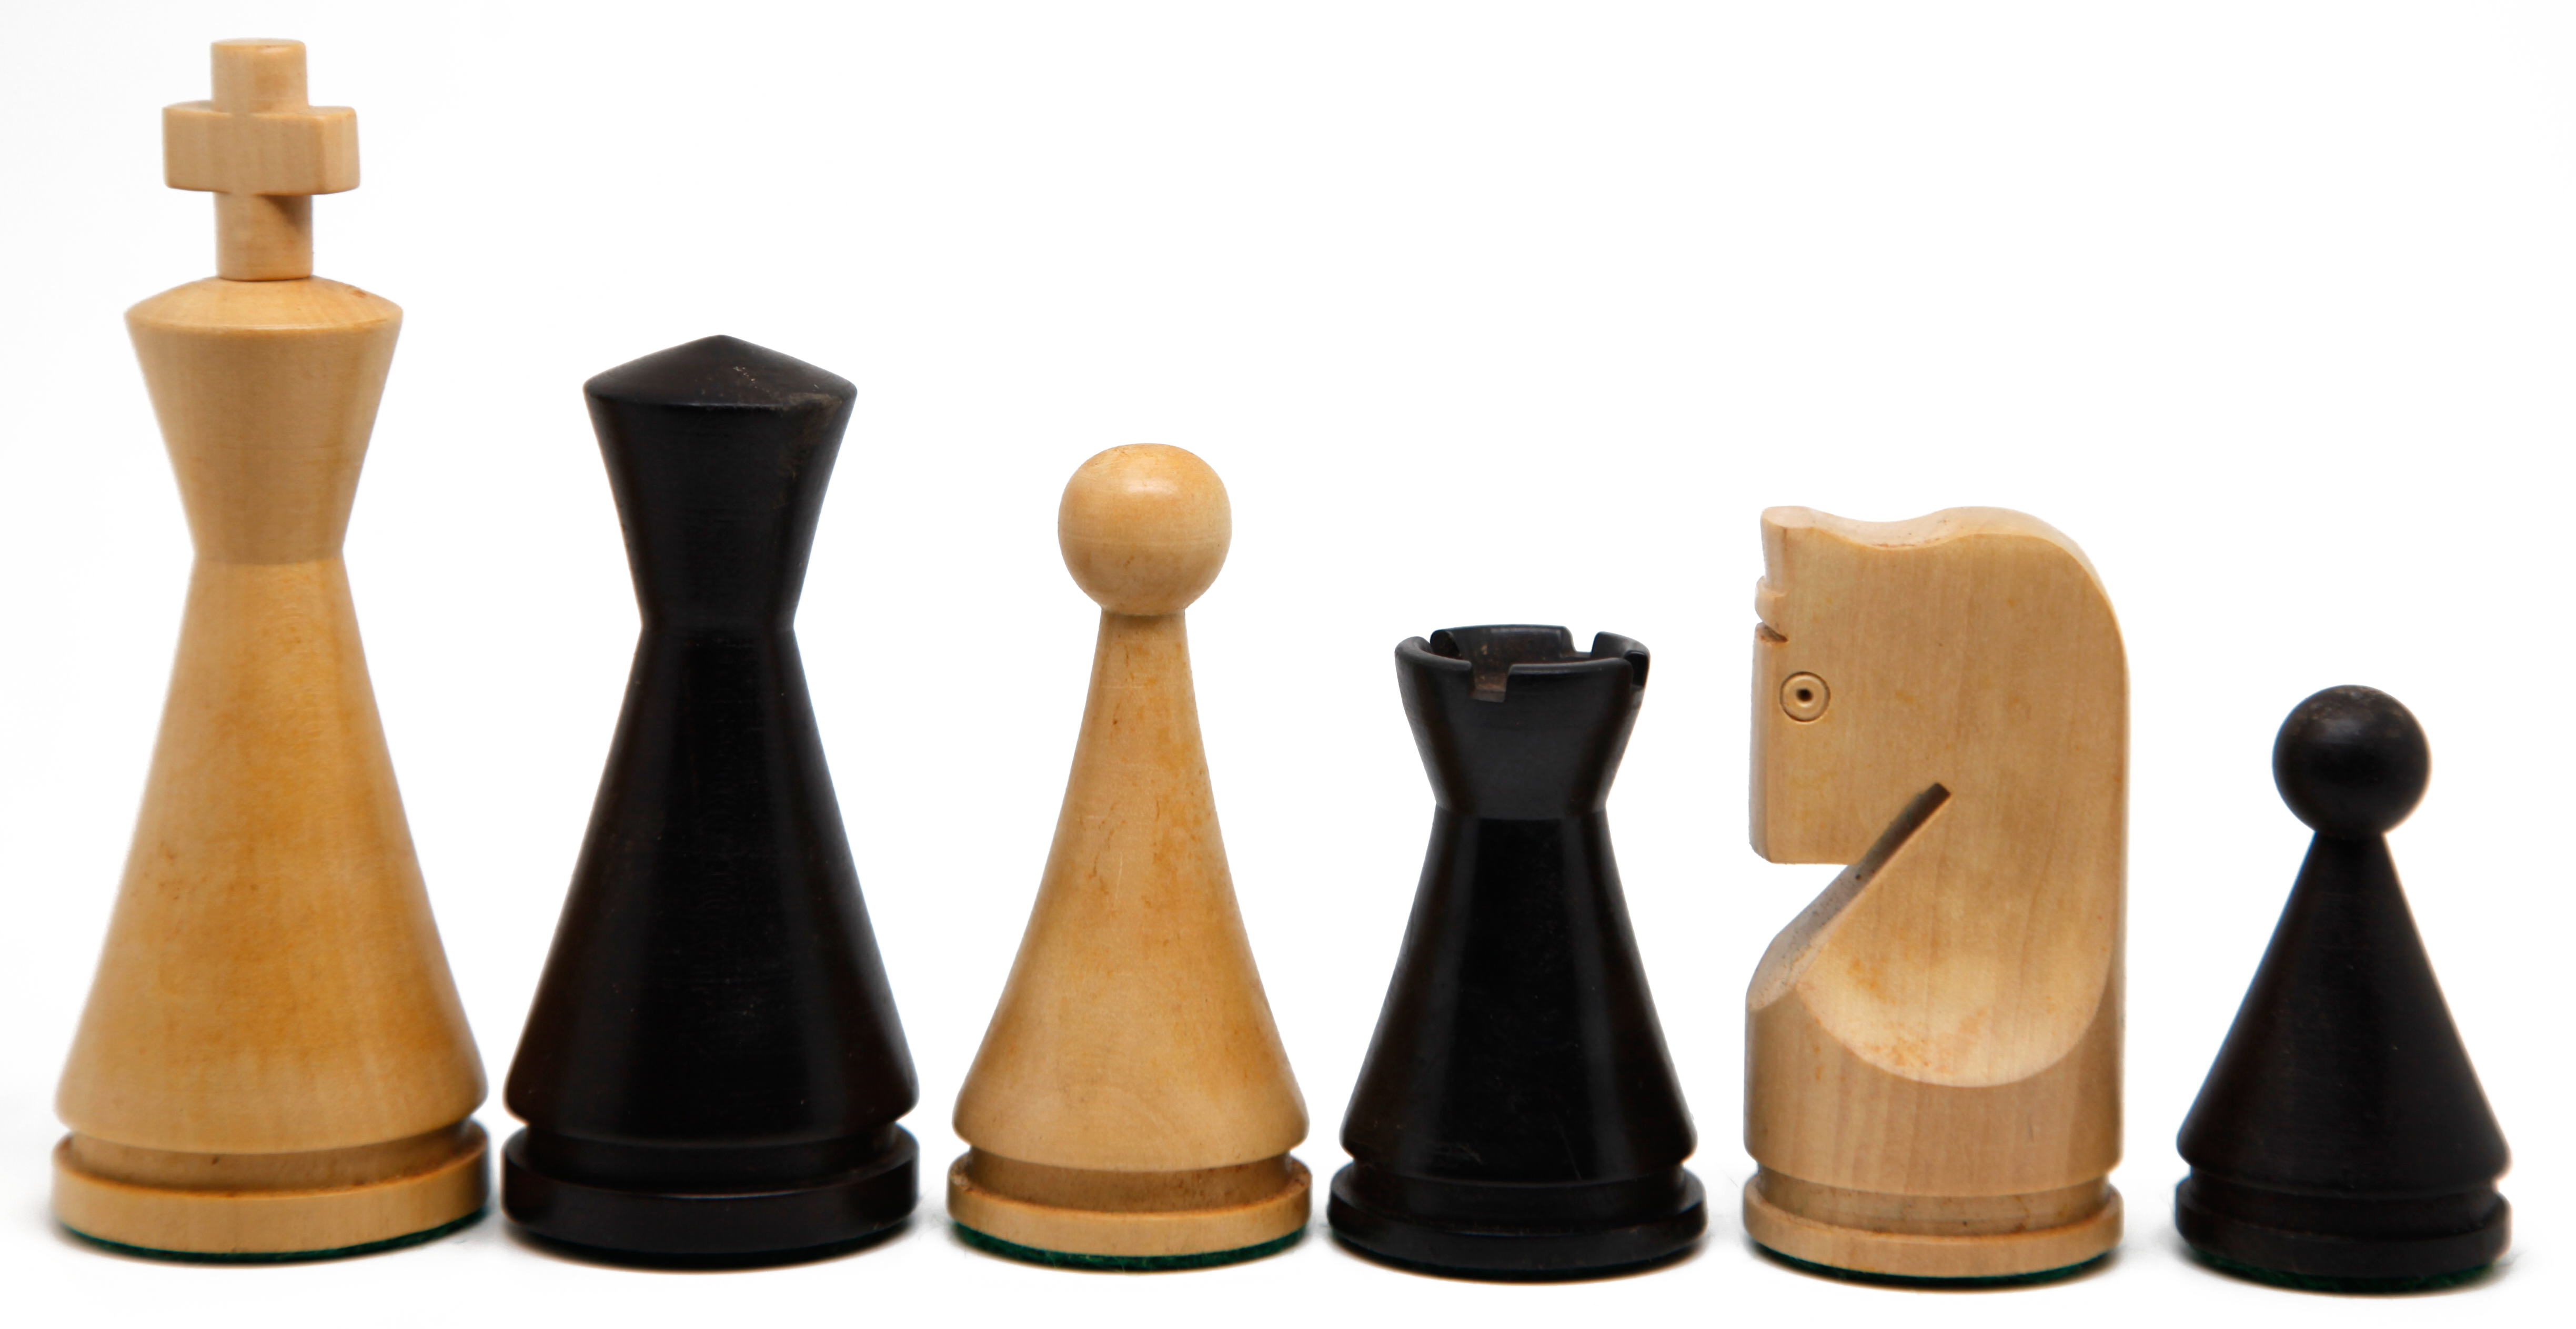 VI/ Piezas de ajedrez modelo Cone modernas "3.75" Ebanizado